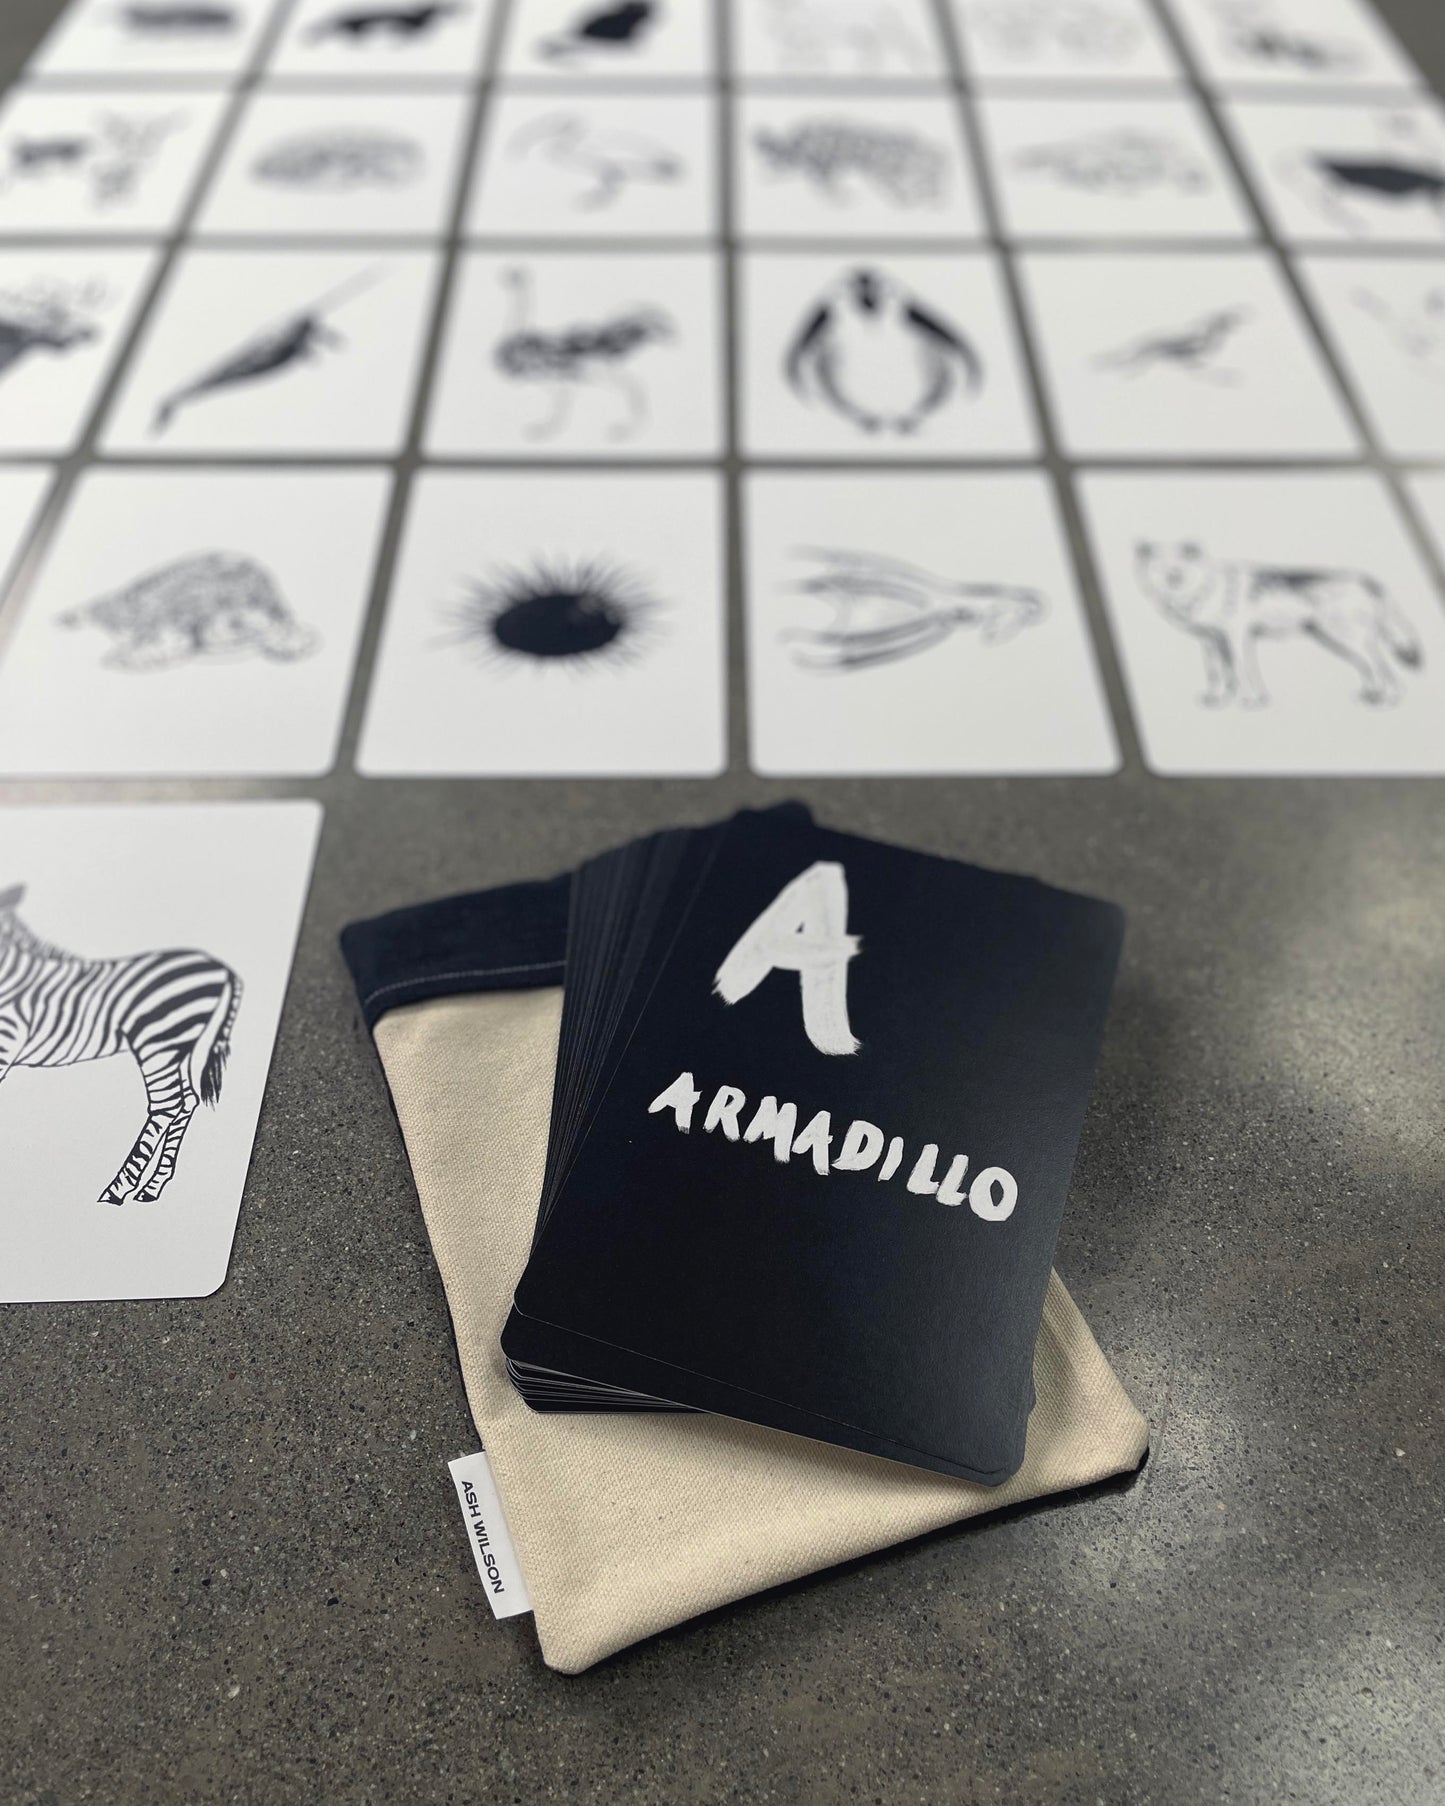 A-Z Animal Alphabet Flashcard Set